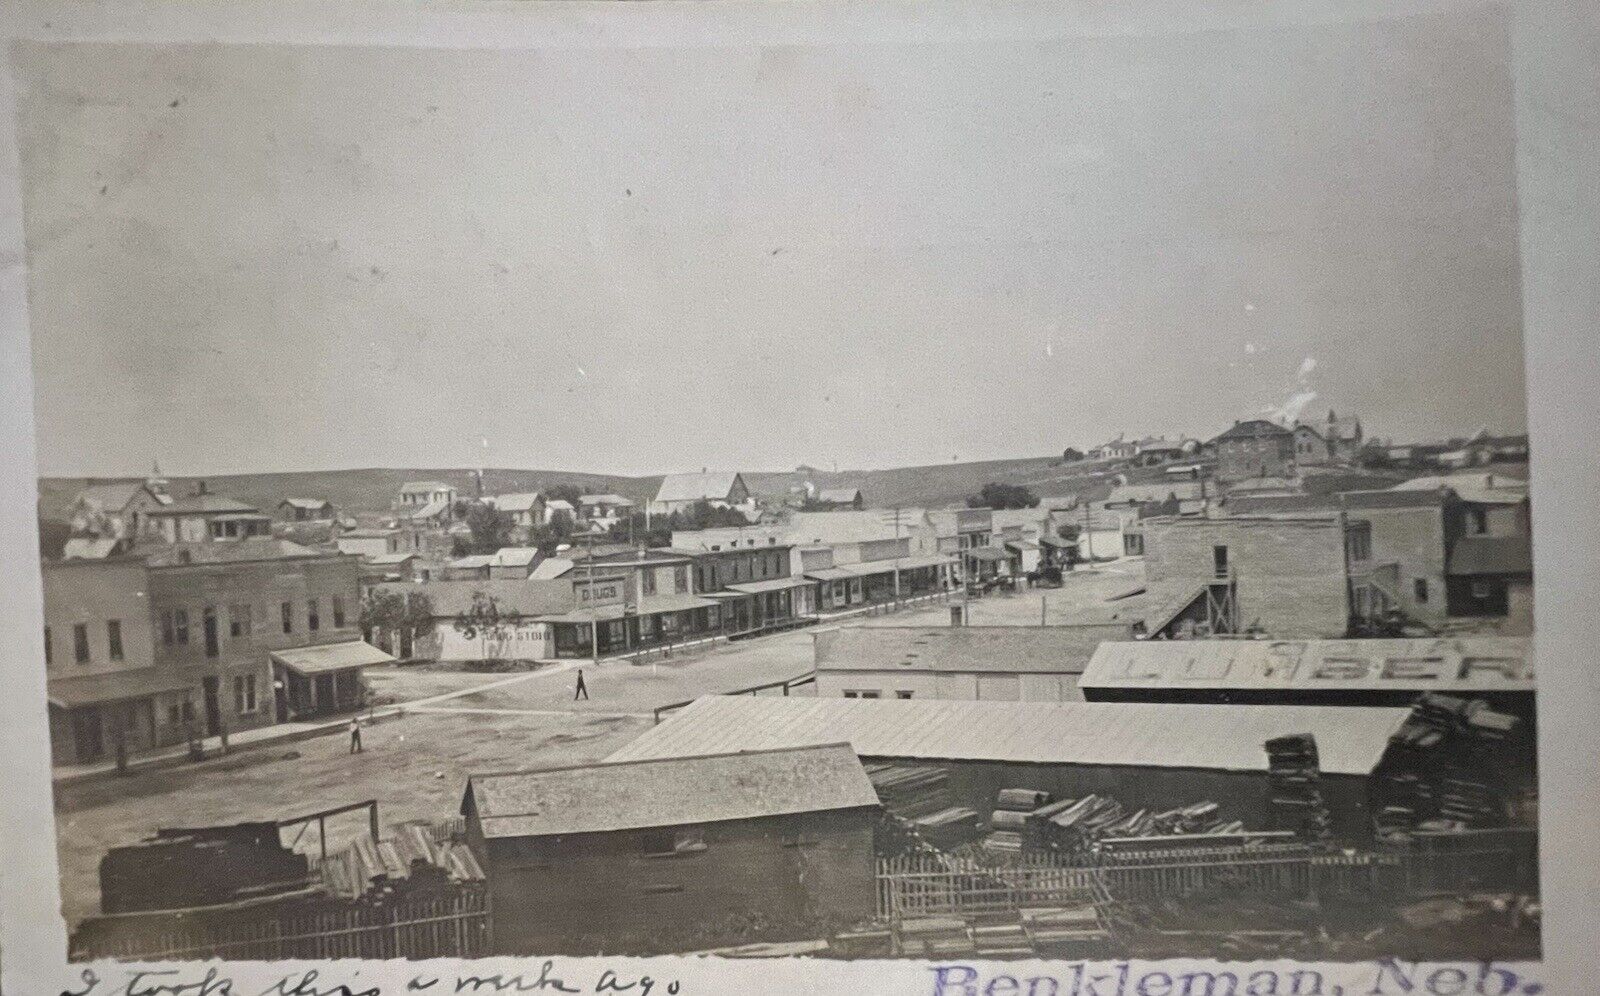 1907 Real Photo Postcard RPPC BENKLEMAN, NEBRASKA NE Small Town USA Horses Buggy